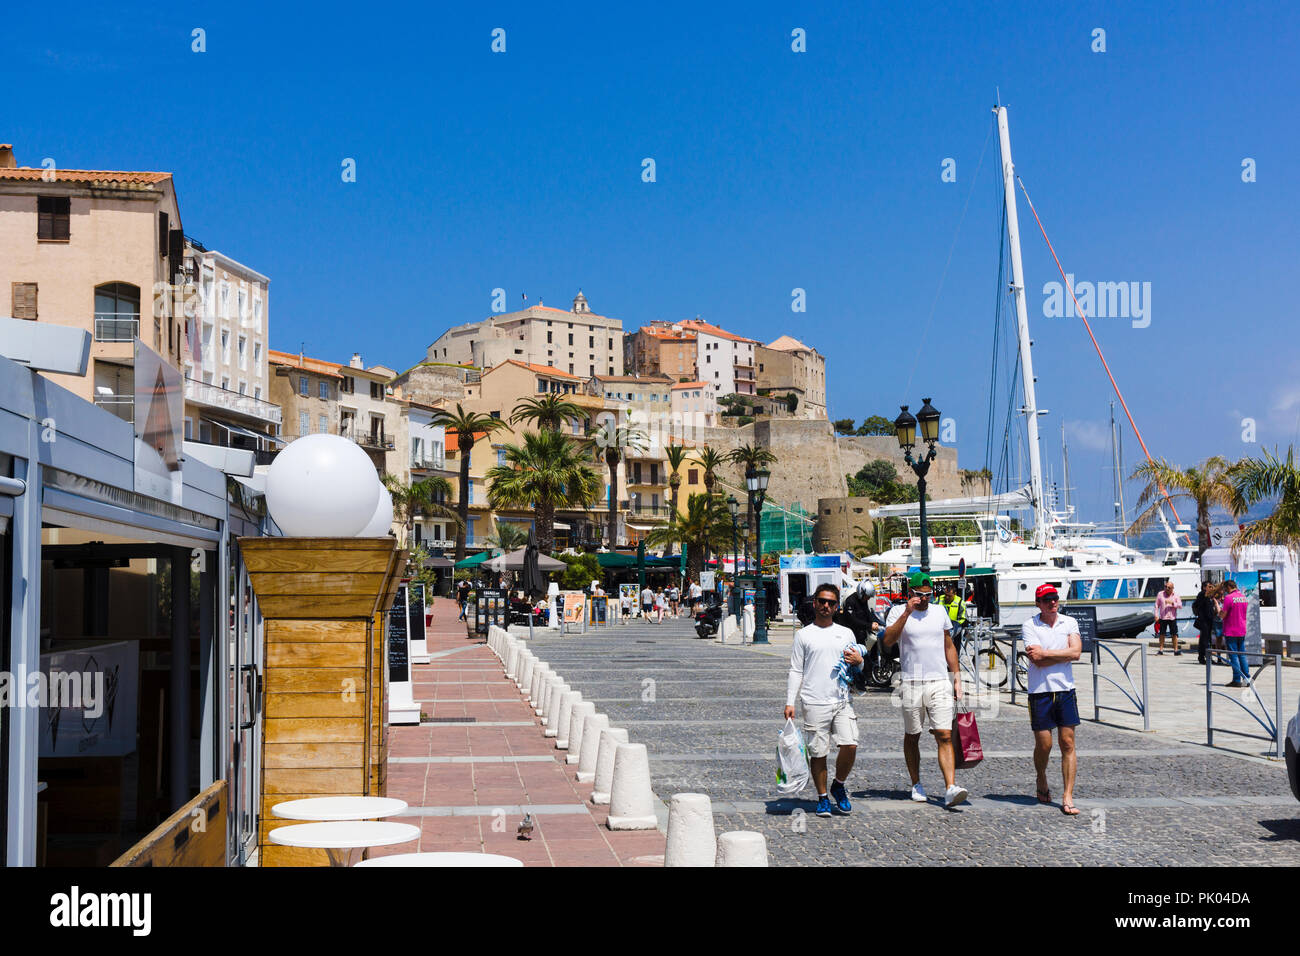 Calvi waterfront, citadel in background. Calvi, Corsica, France Stock Photo